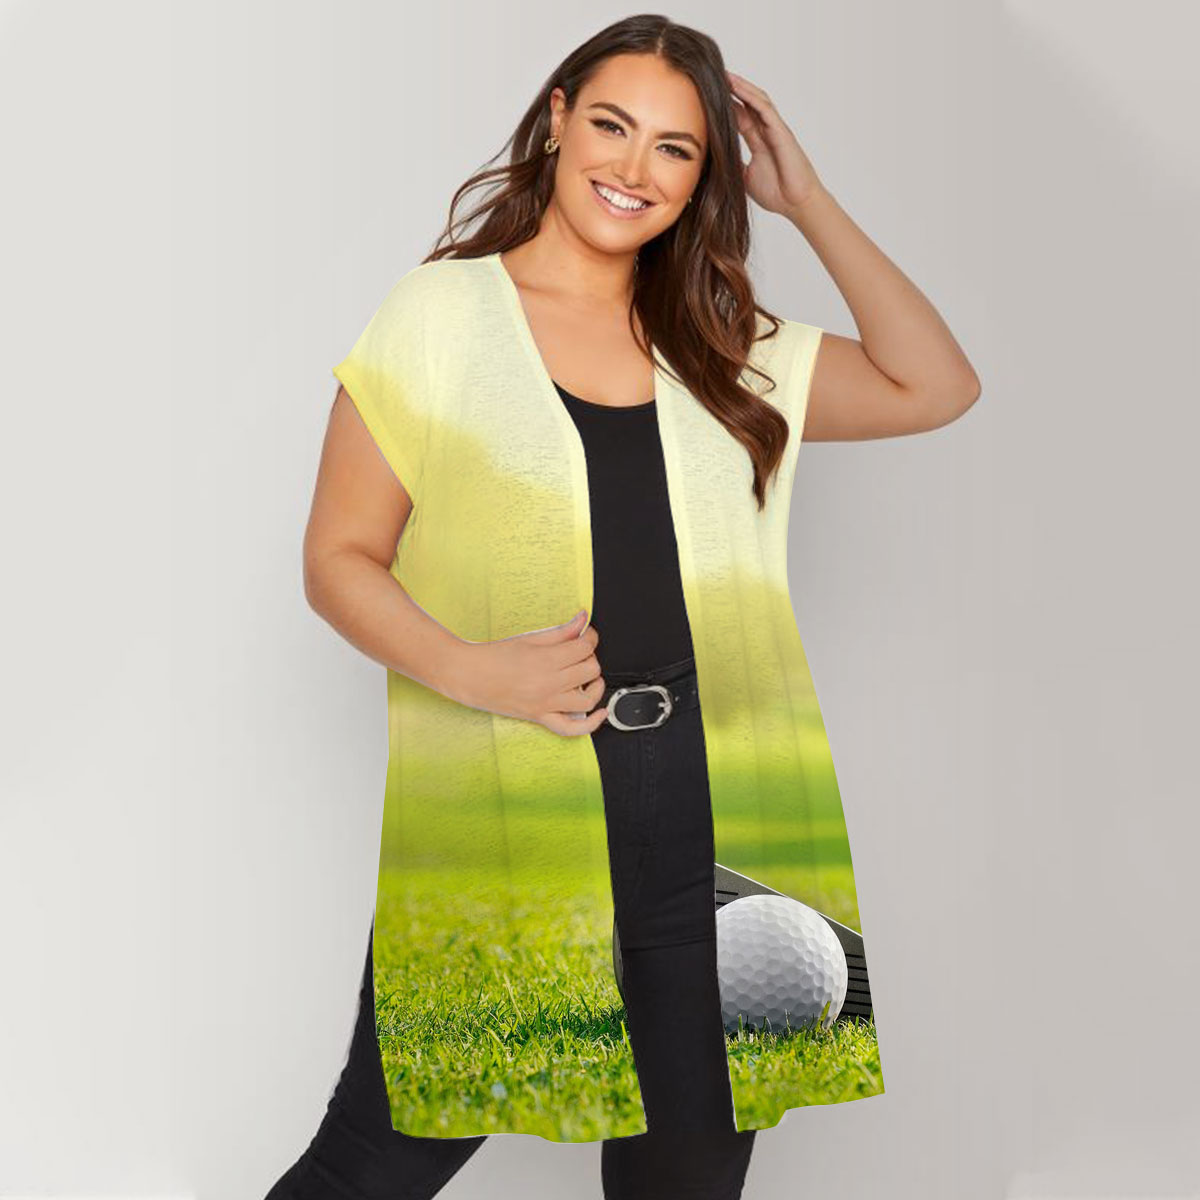 Golf Tools On Grass Short Sleeve Cardigan